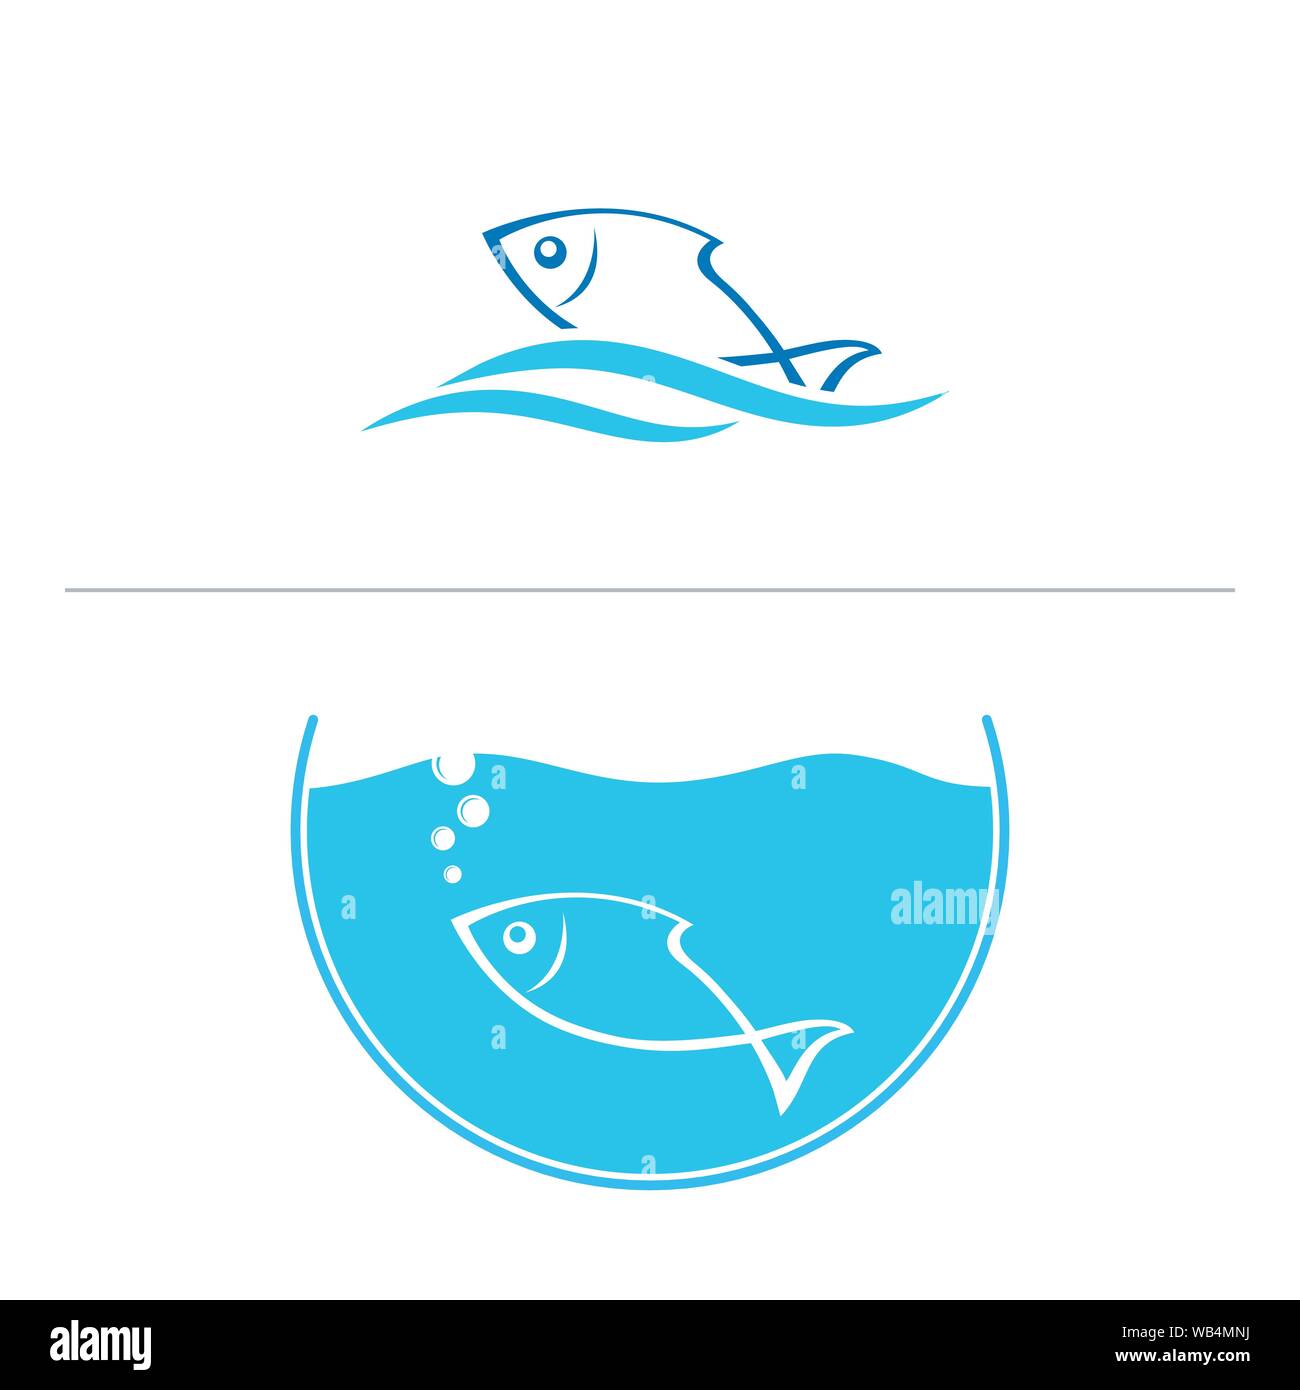 Fish in water icon. Fish in aquarium icon. Flat style illustration, fish template logo. Stock Vector